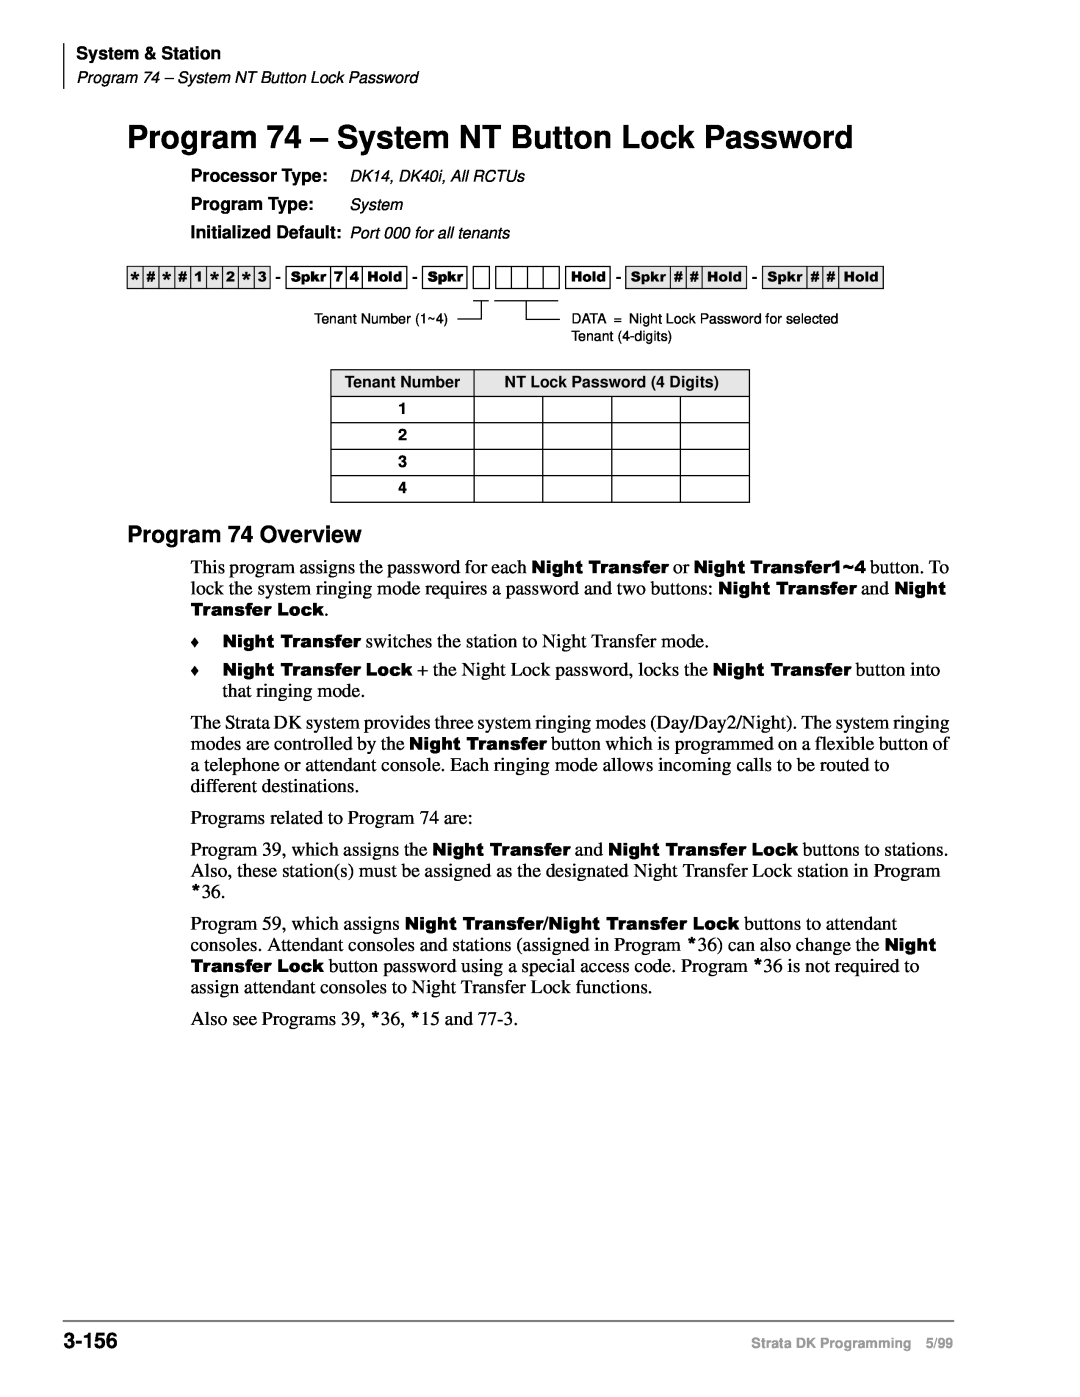 Toshiba dk14 manual Program 74 – System NT Button Lock Password, Program 74 Overview, 3-156 